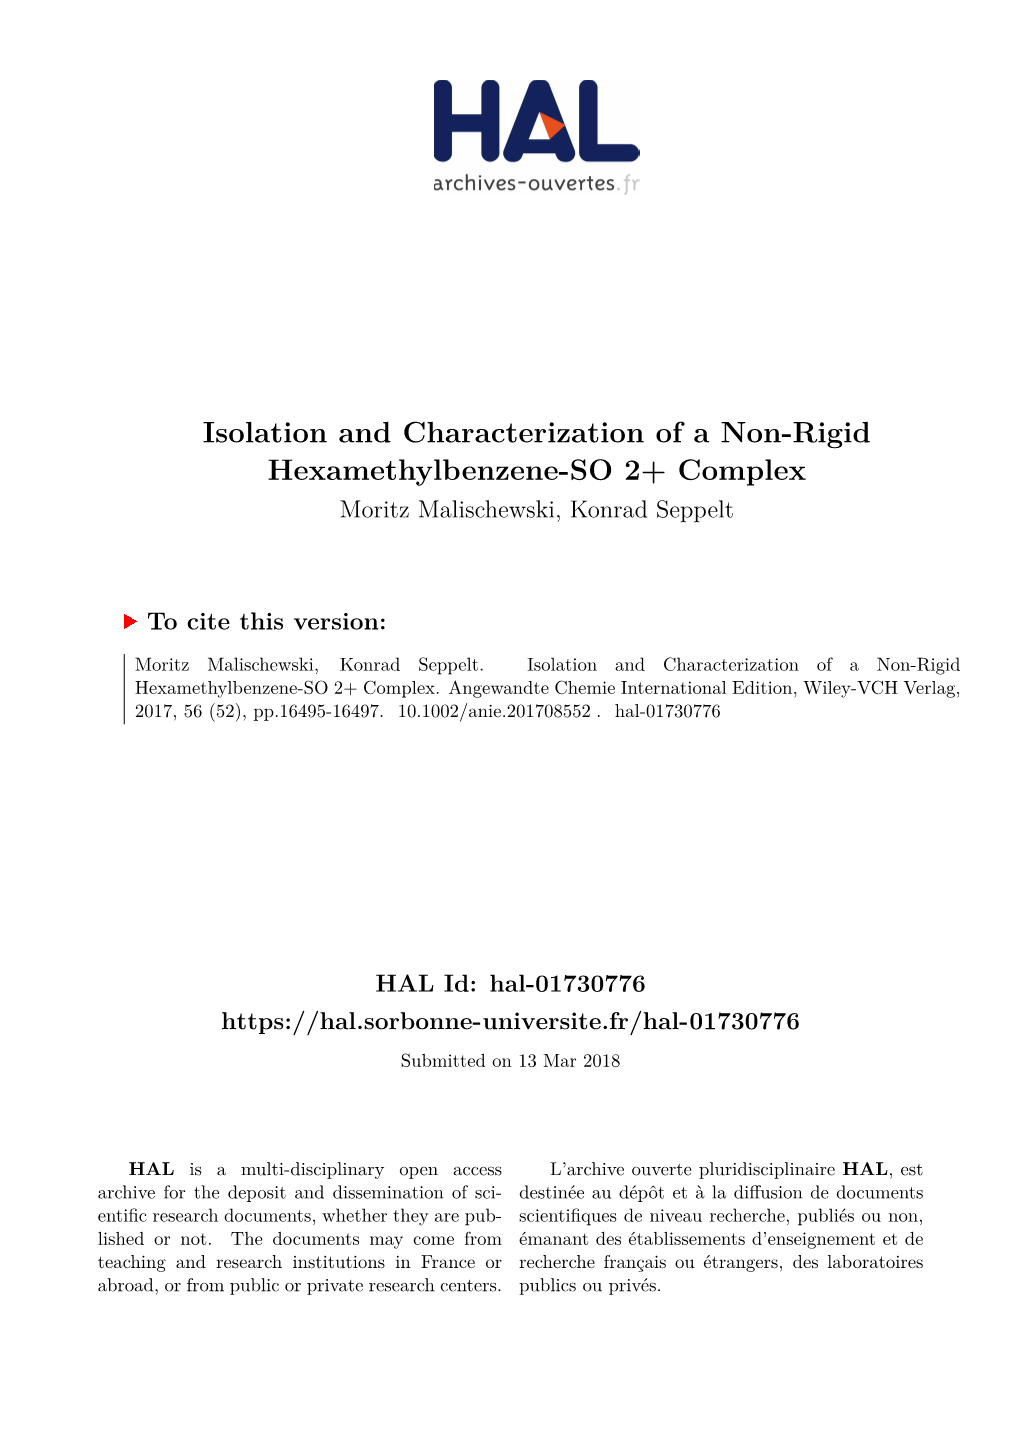 Isolation and Characterization of a Non-Rigid Hexamethylbenzene-SO 2+ Complex Moritz Malischewski, Konrad Seppelt